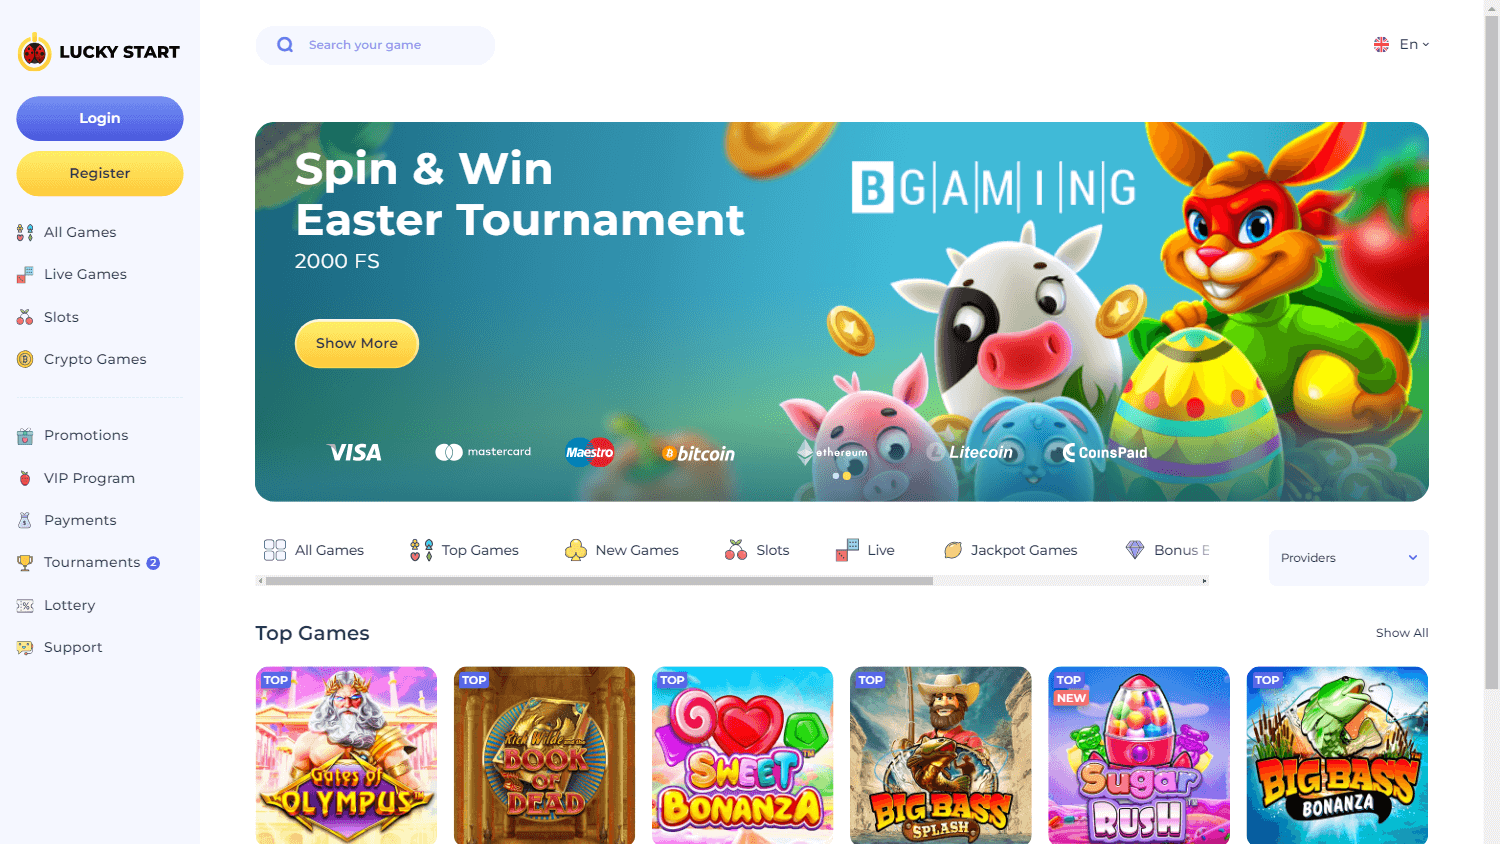 luckystart_casino_homepage_desktop